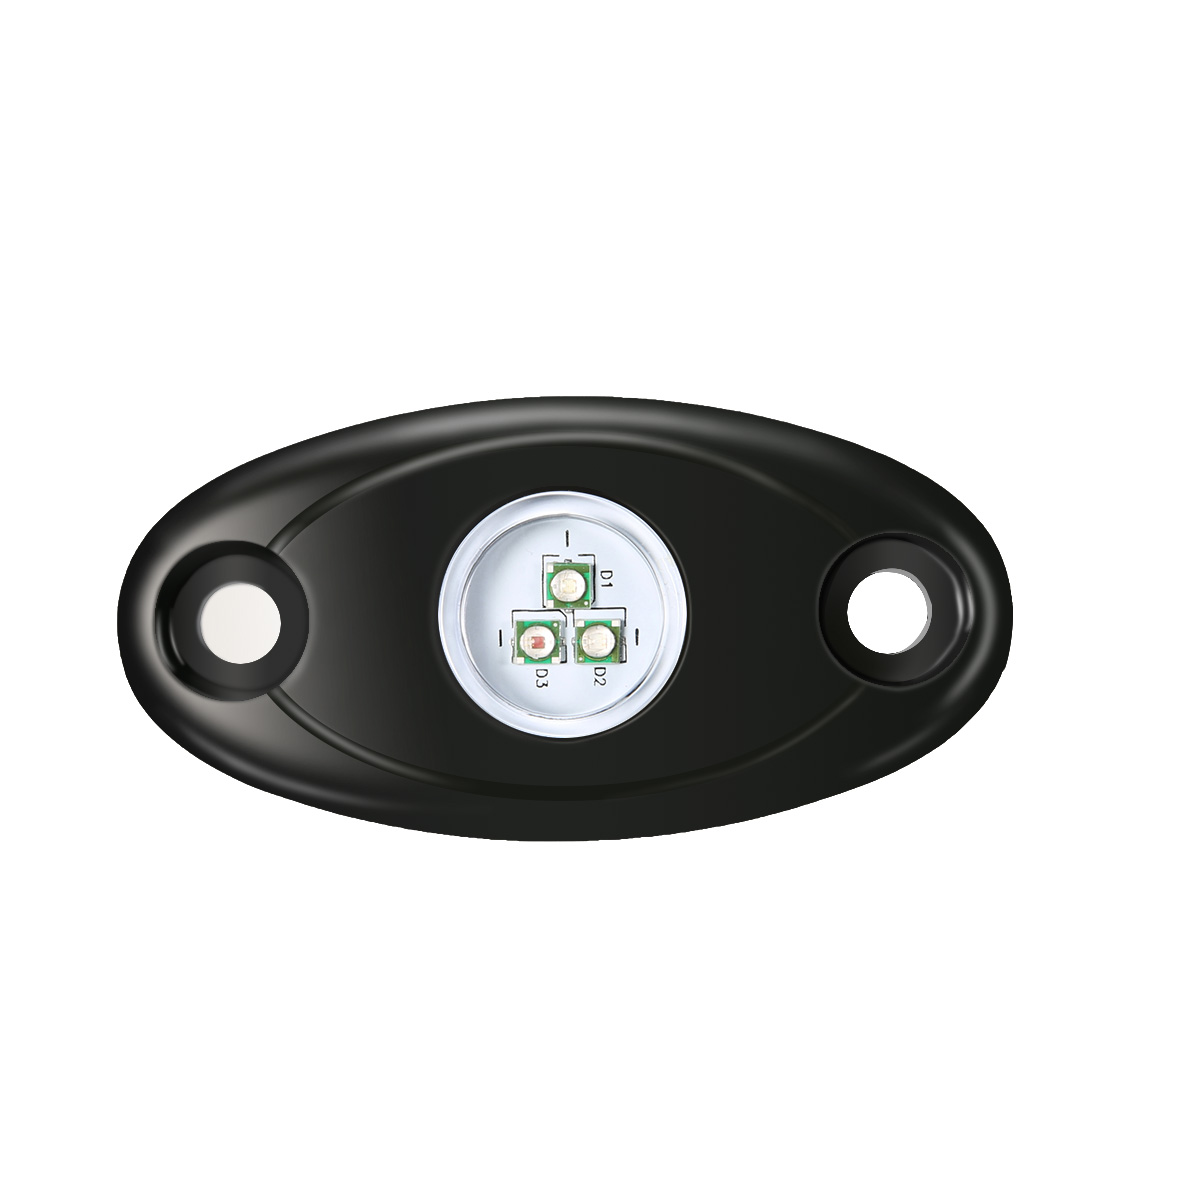 8PCS-12V-USB-RGB-LED-Car-Atmosphere-Lights-Interior-Decoration-Lamp-Phone-bluetooth-APP-Control-1617596